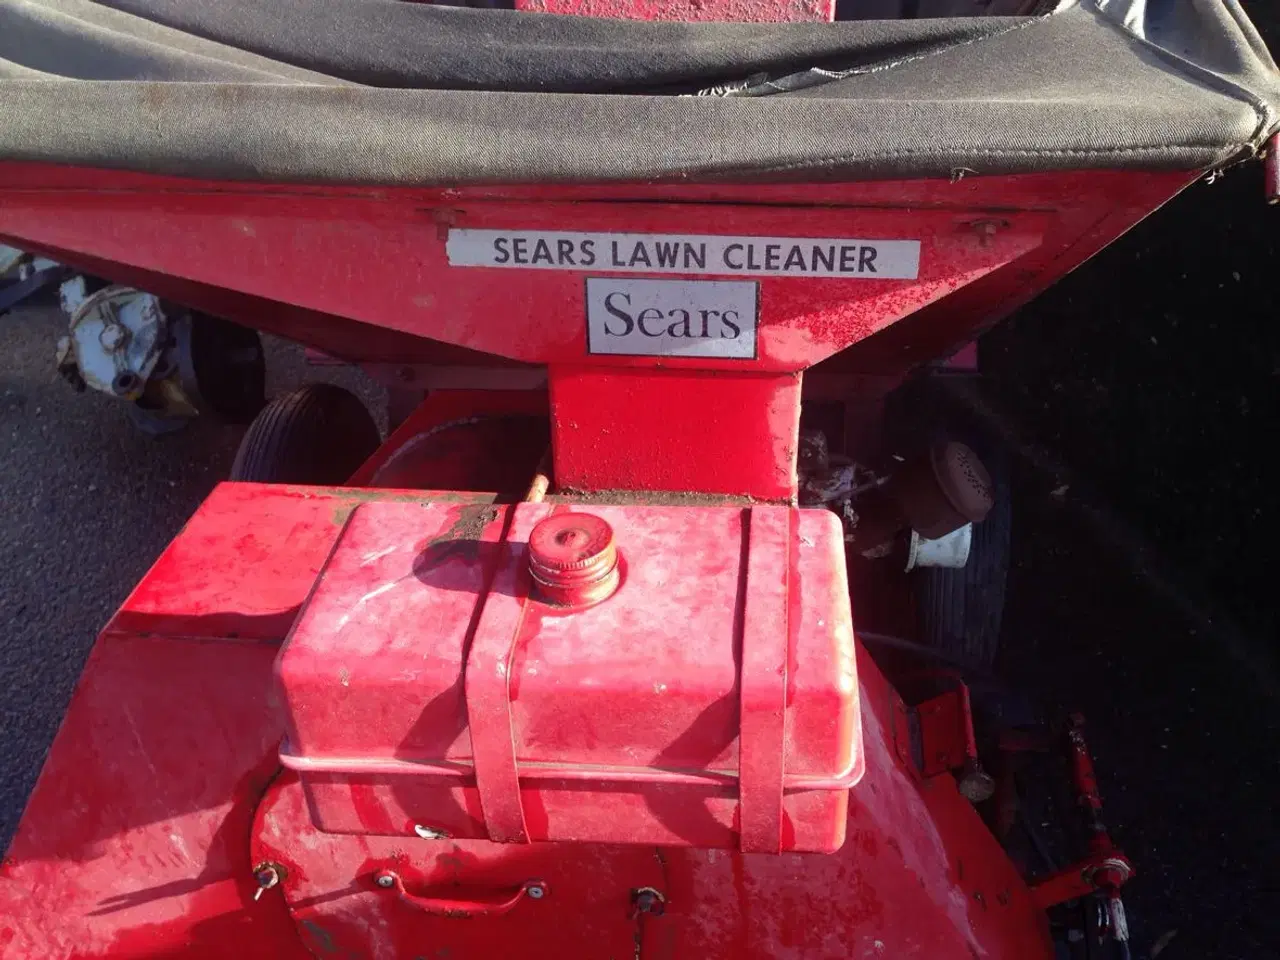 Billede 2 - Sears lawn cleaner søges